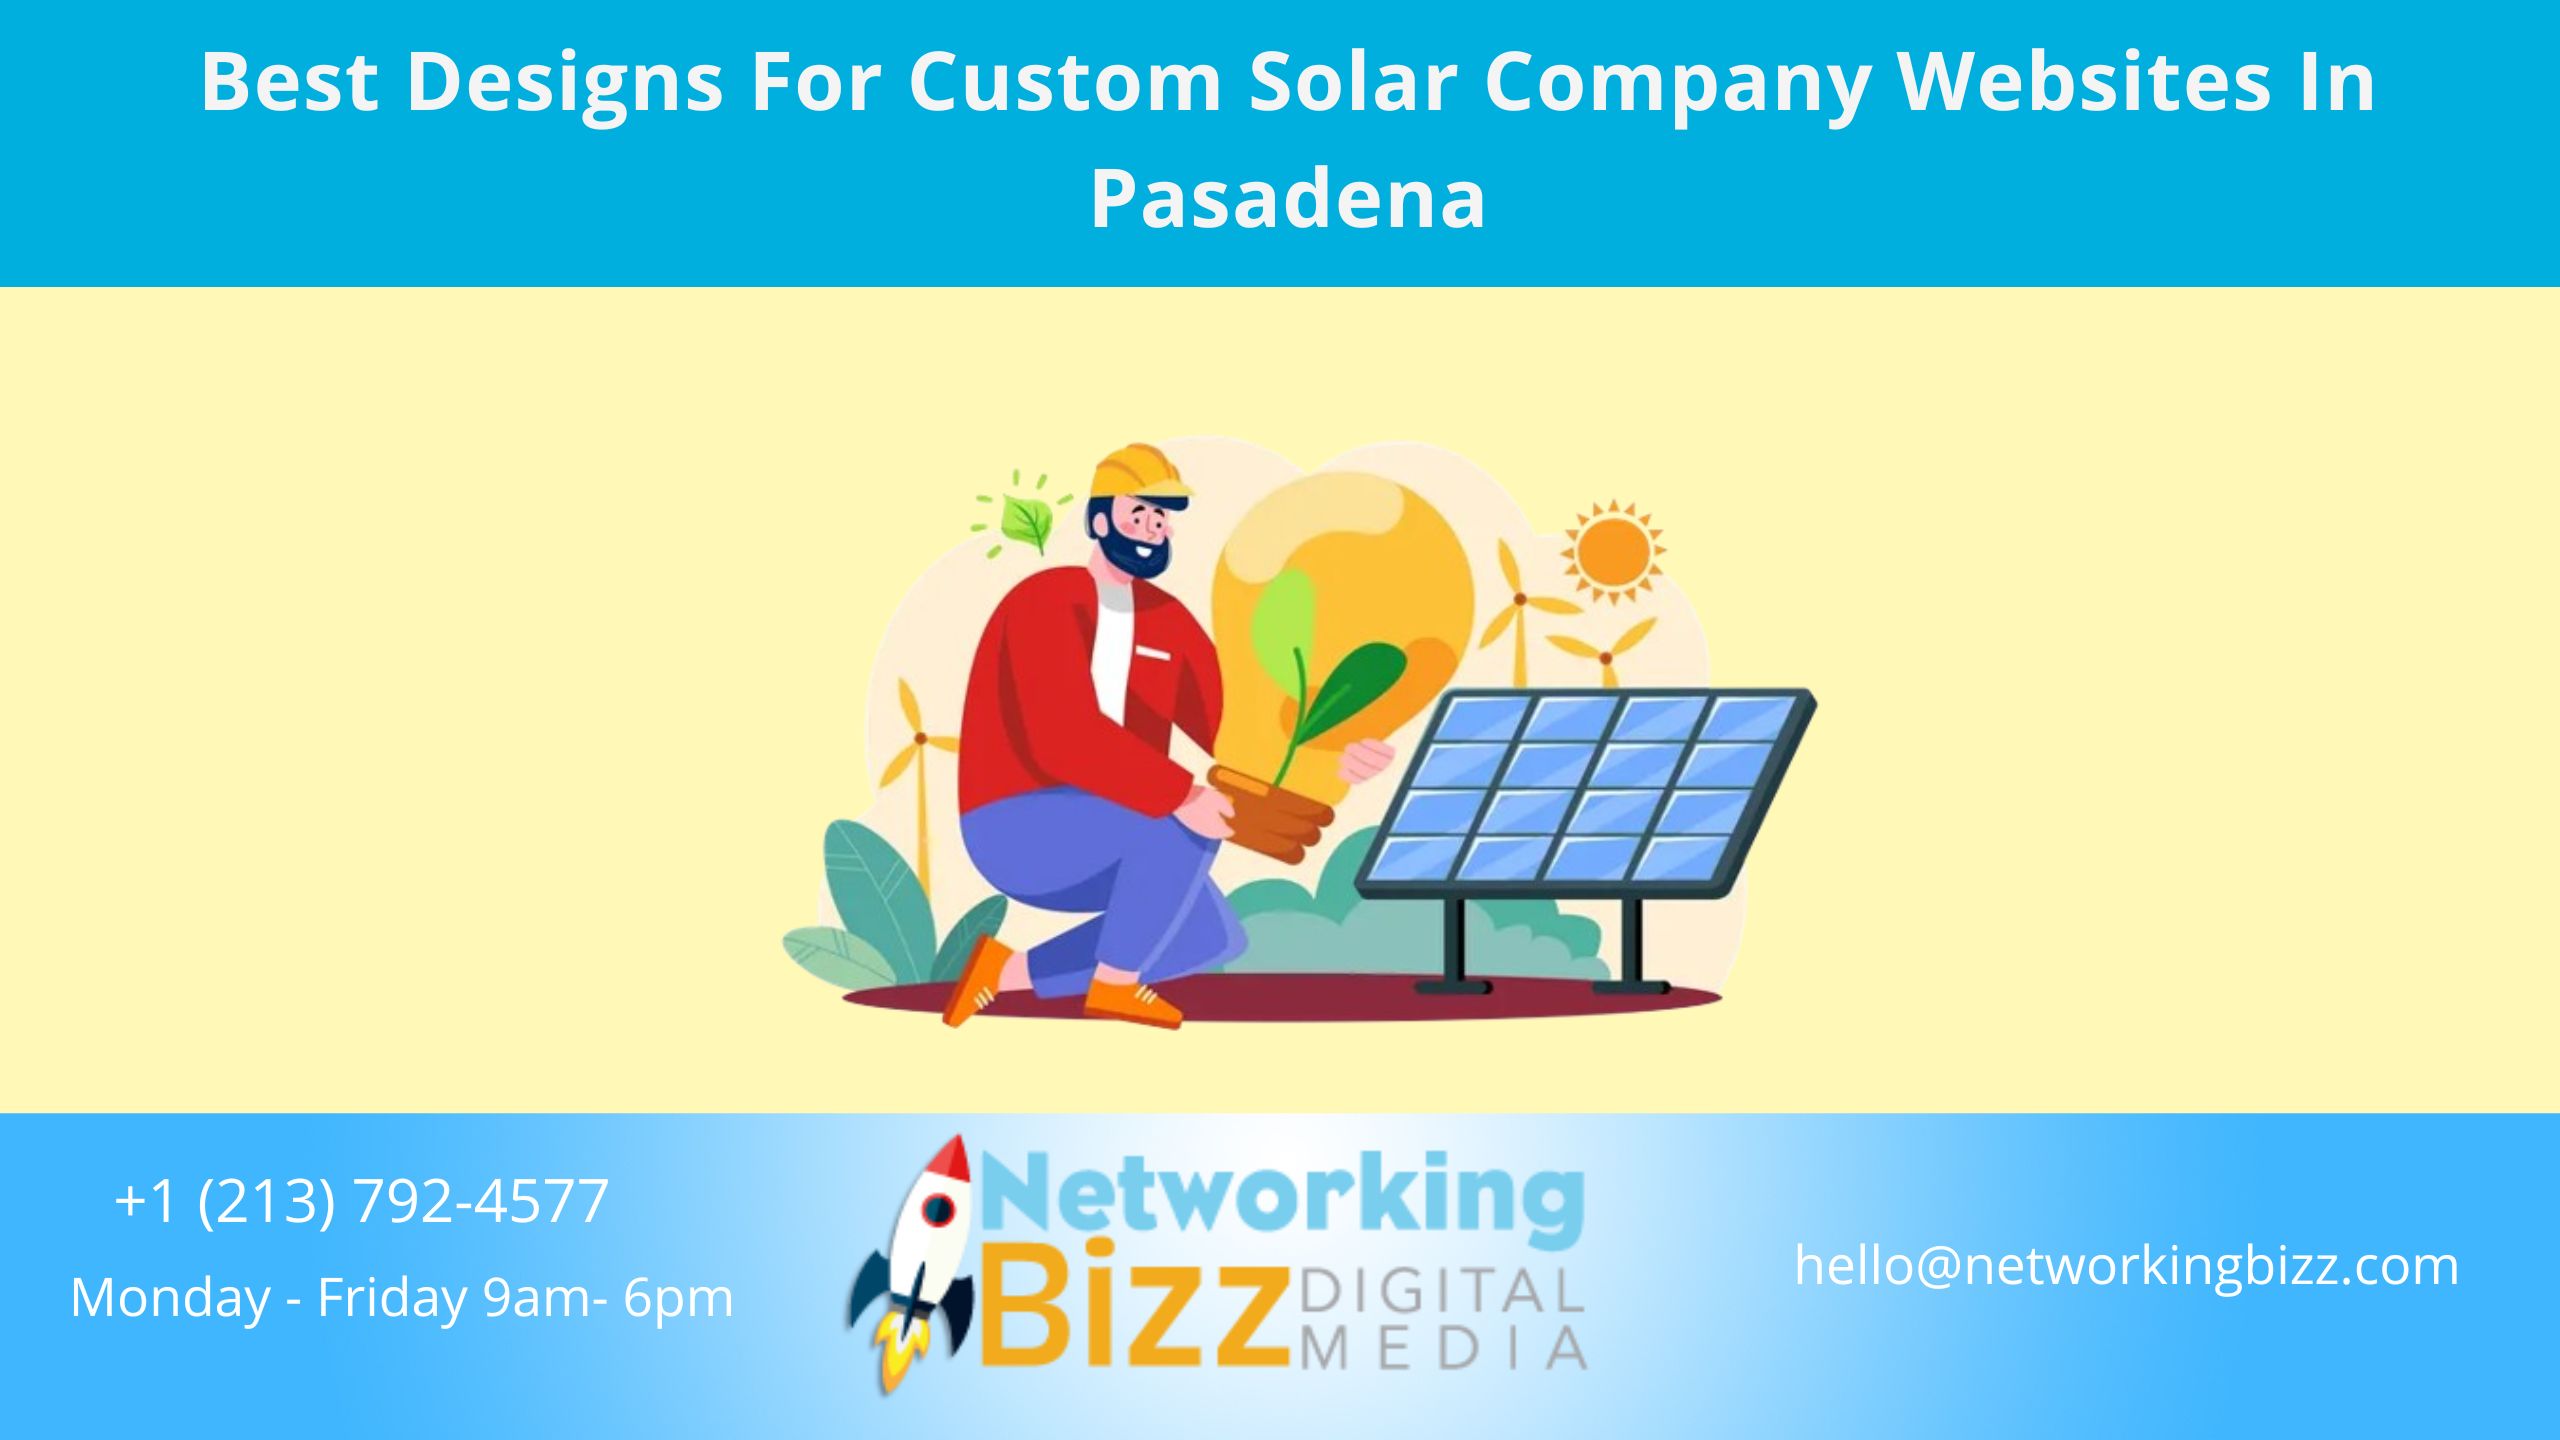 Best Designs For Custom Solar Company Websites In Pasadena